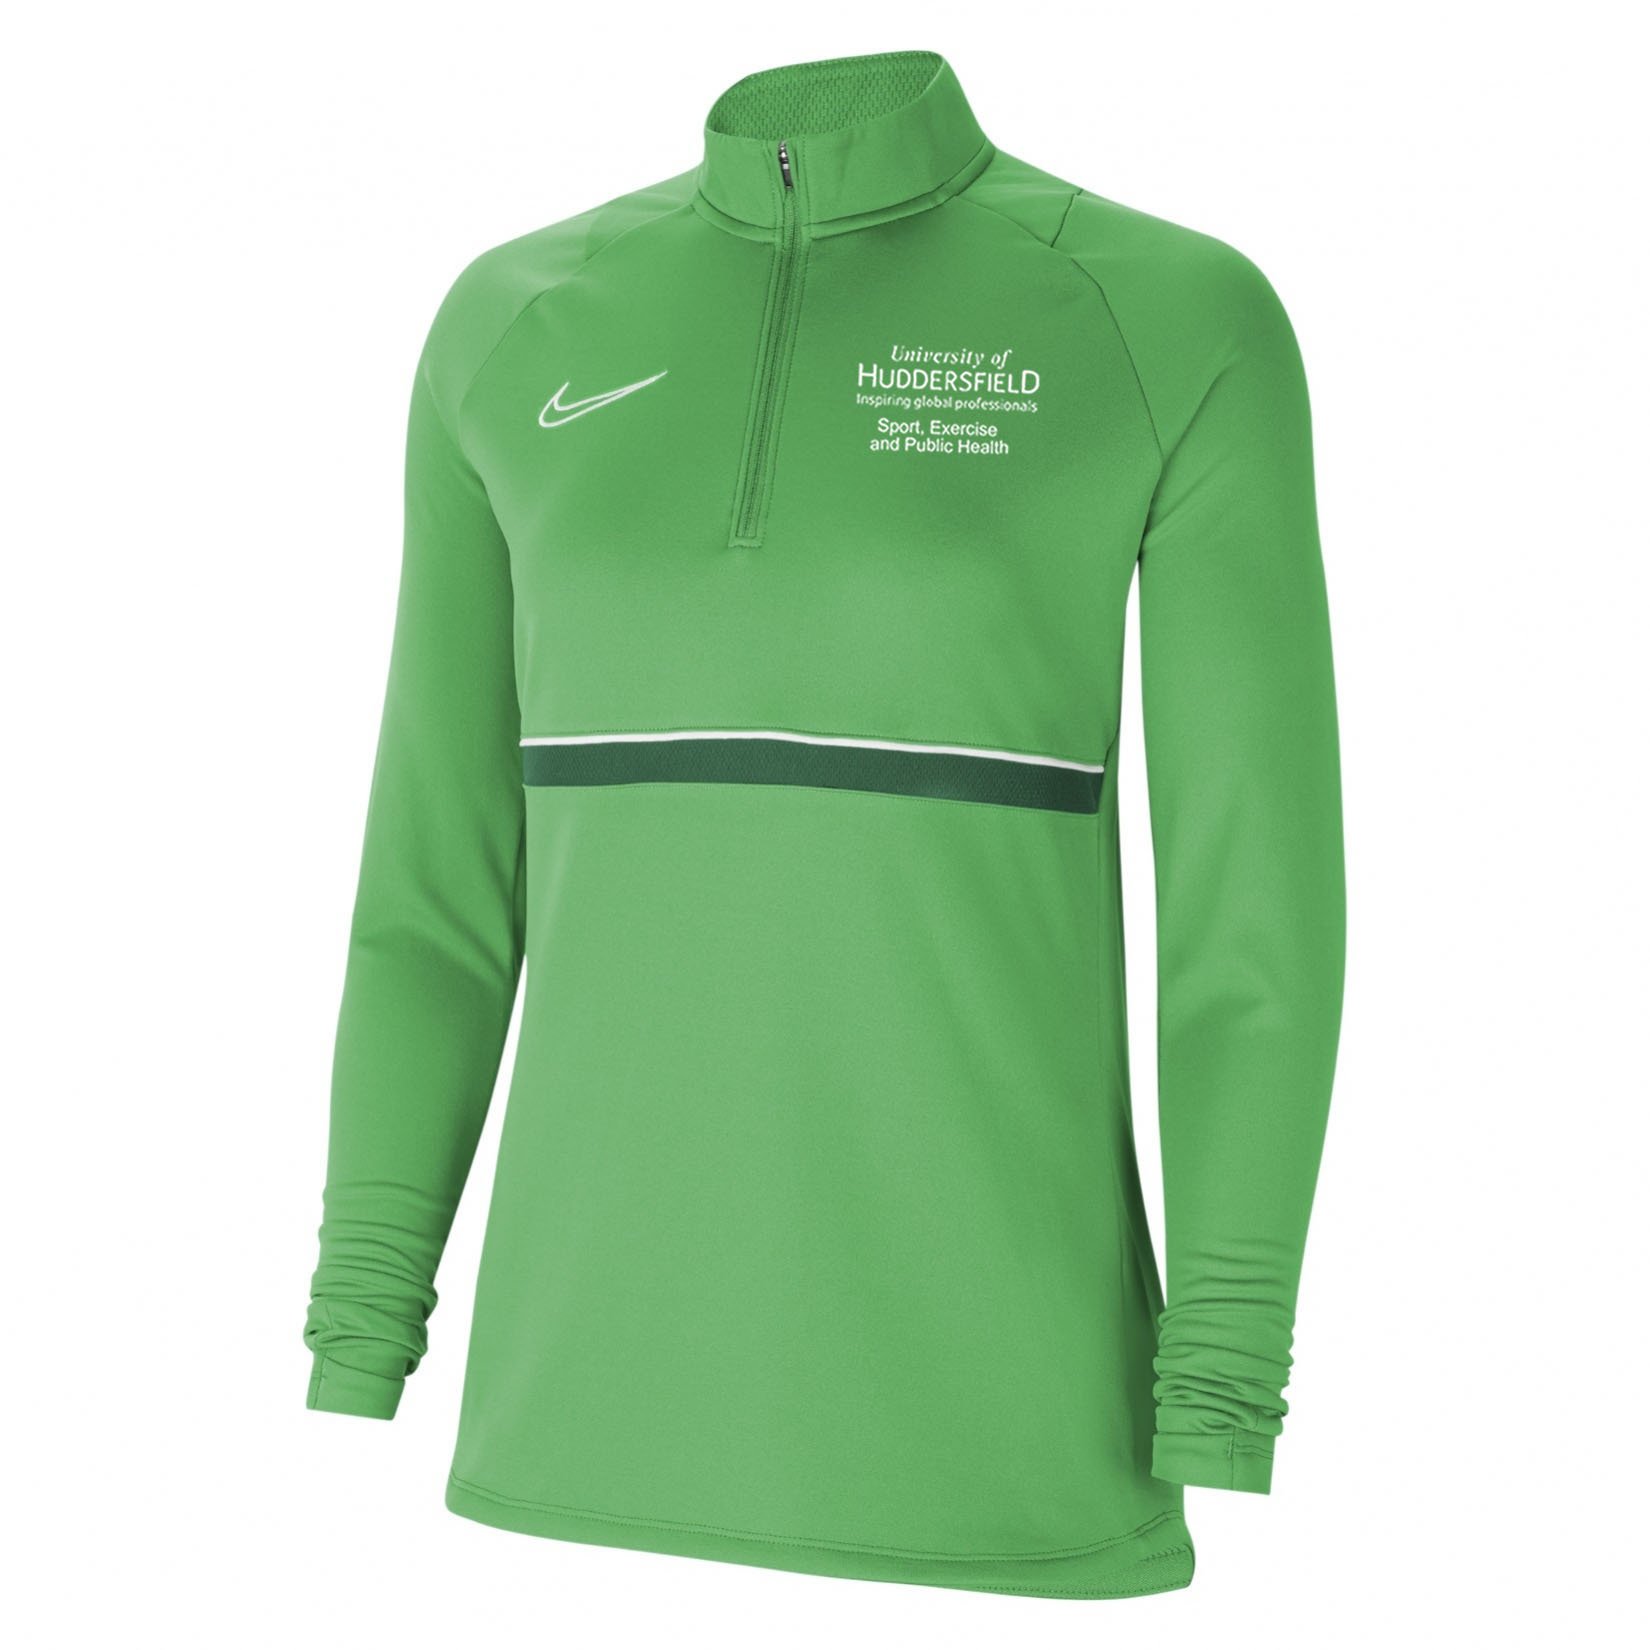 Nike Womens Academy 21 Midlayer (W) Light Green Spark-White-Pine Green-White